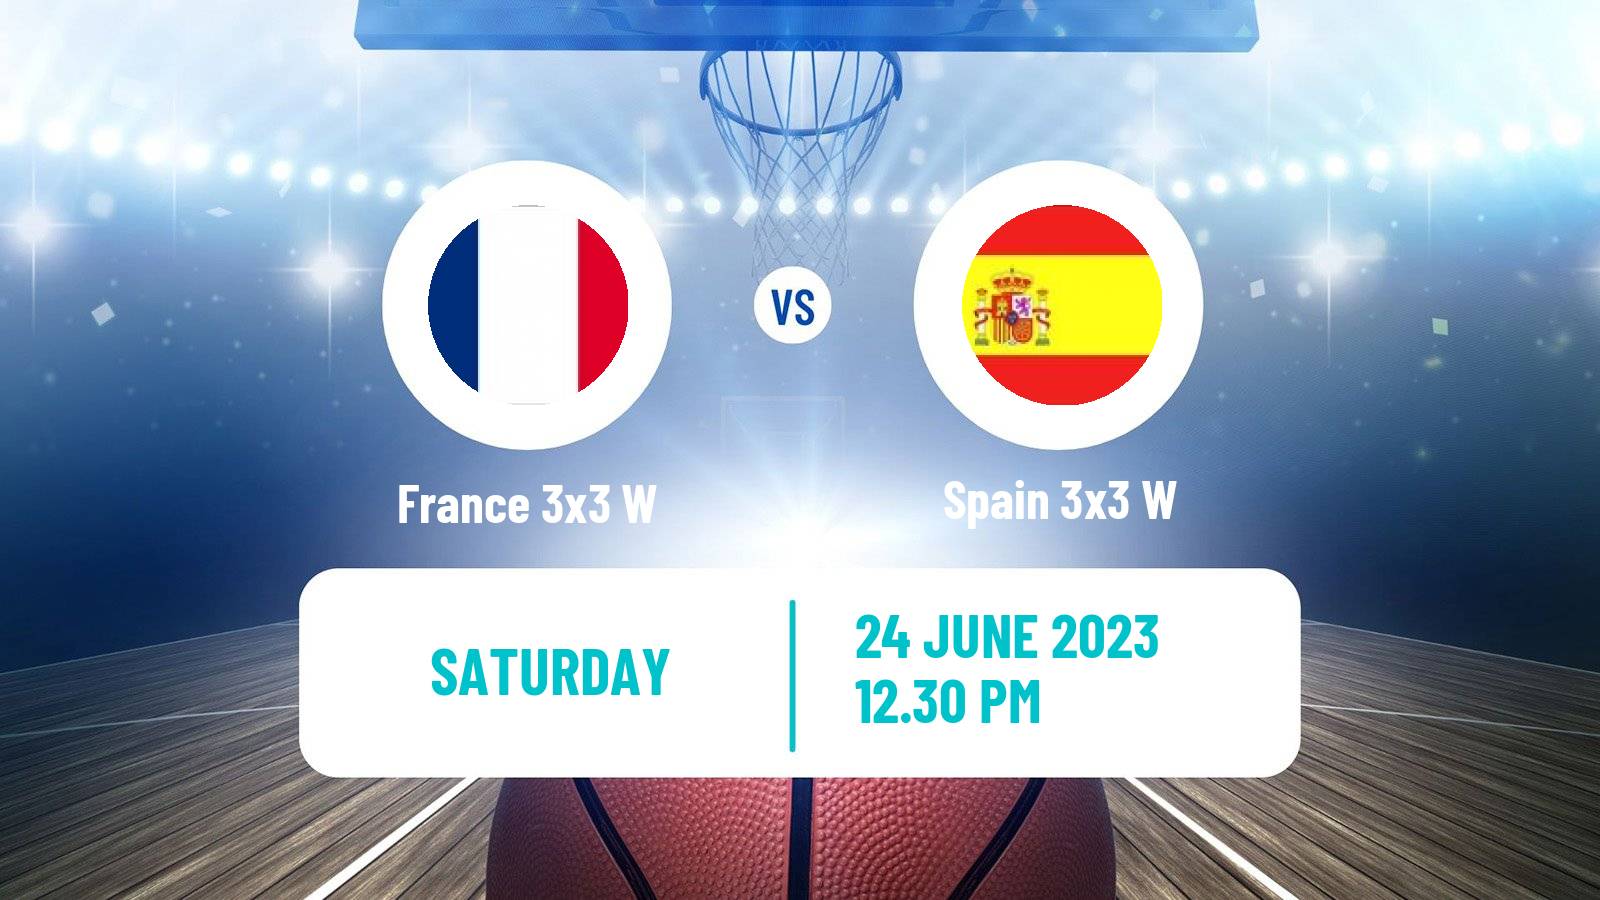 Basketball European Games 3x3 Women France 3x3 W - Spain 3x3 W